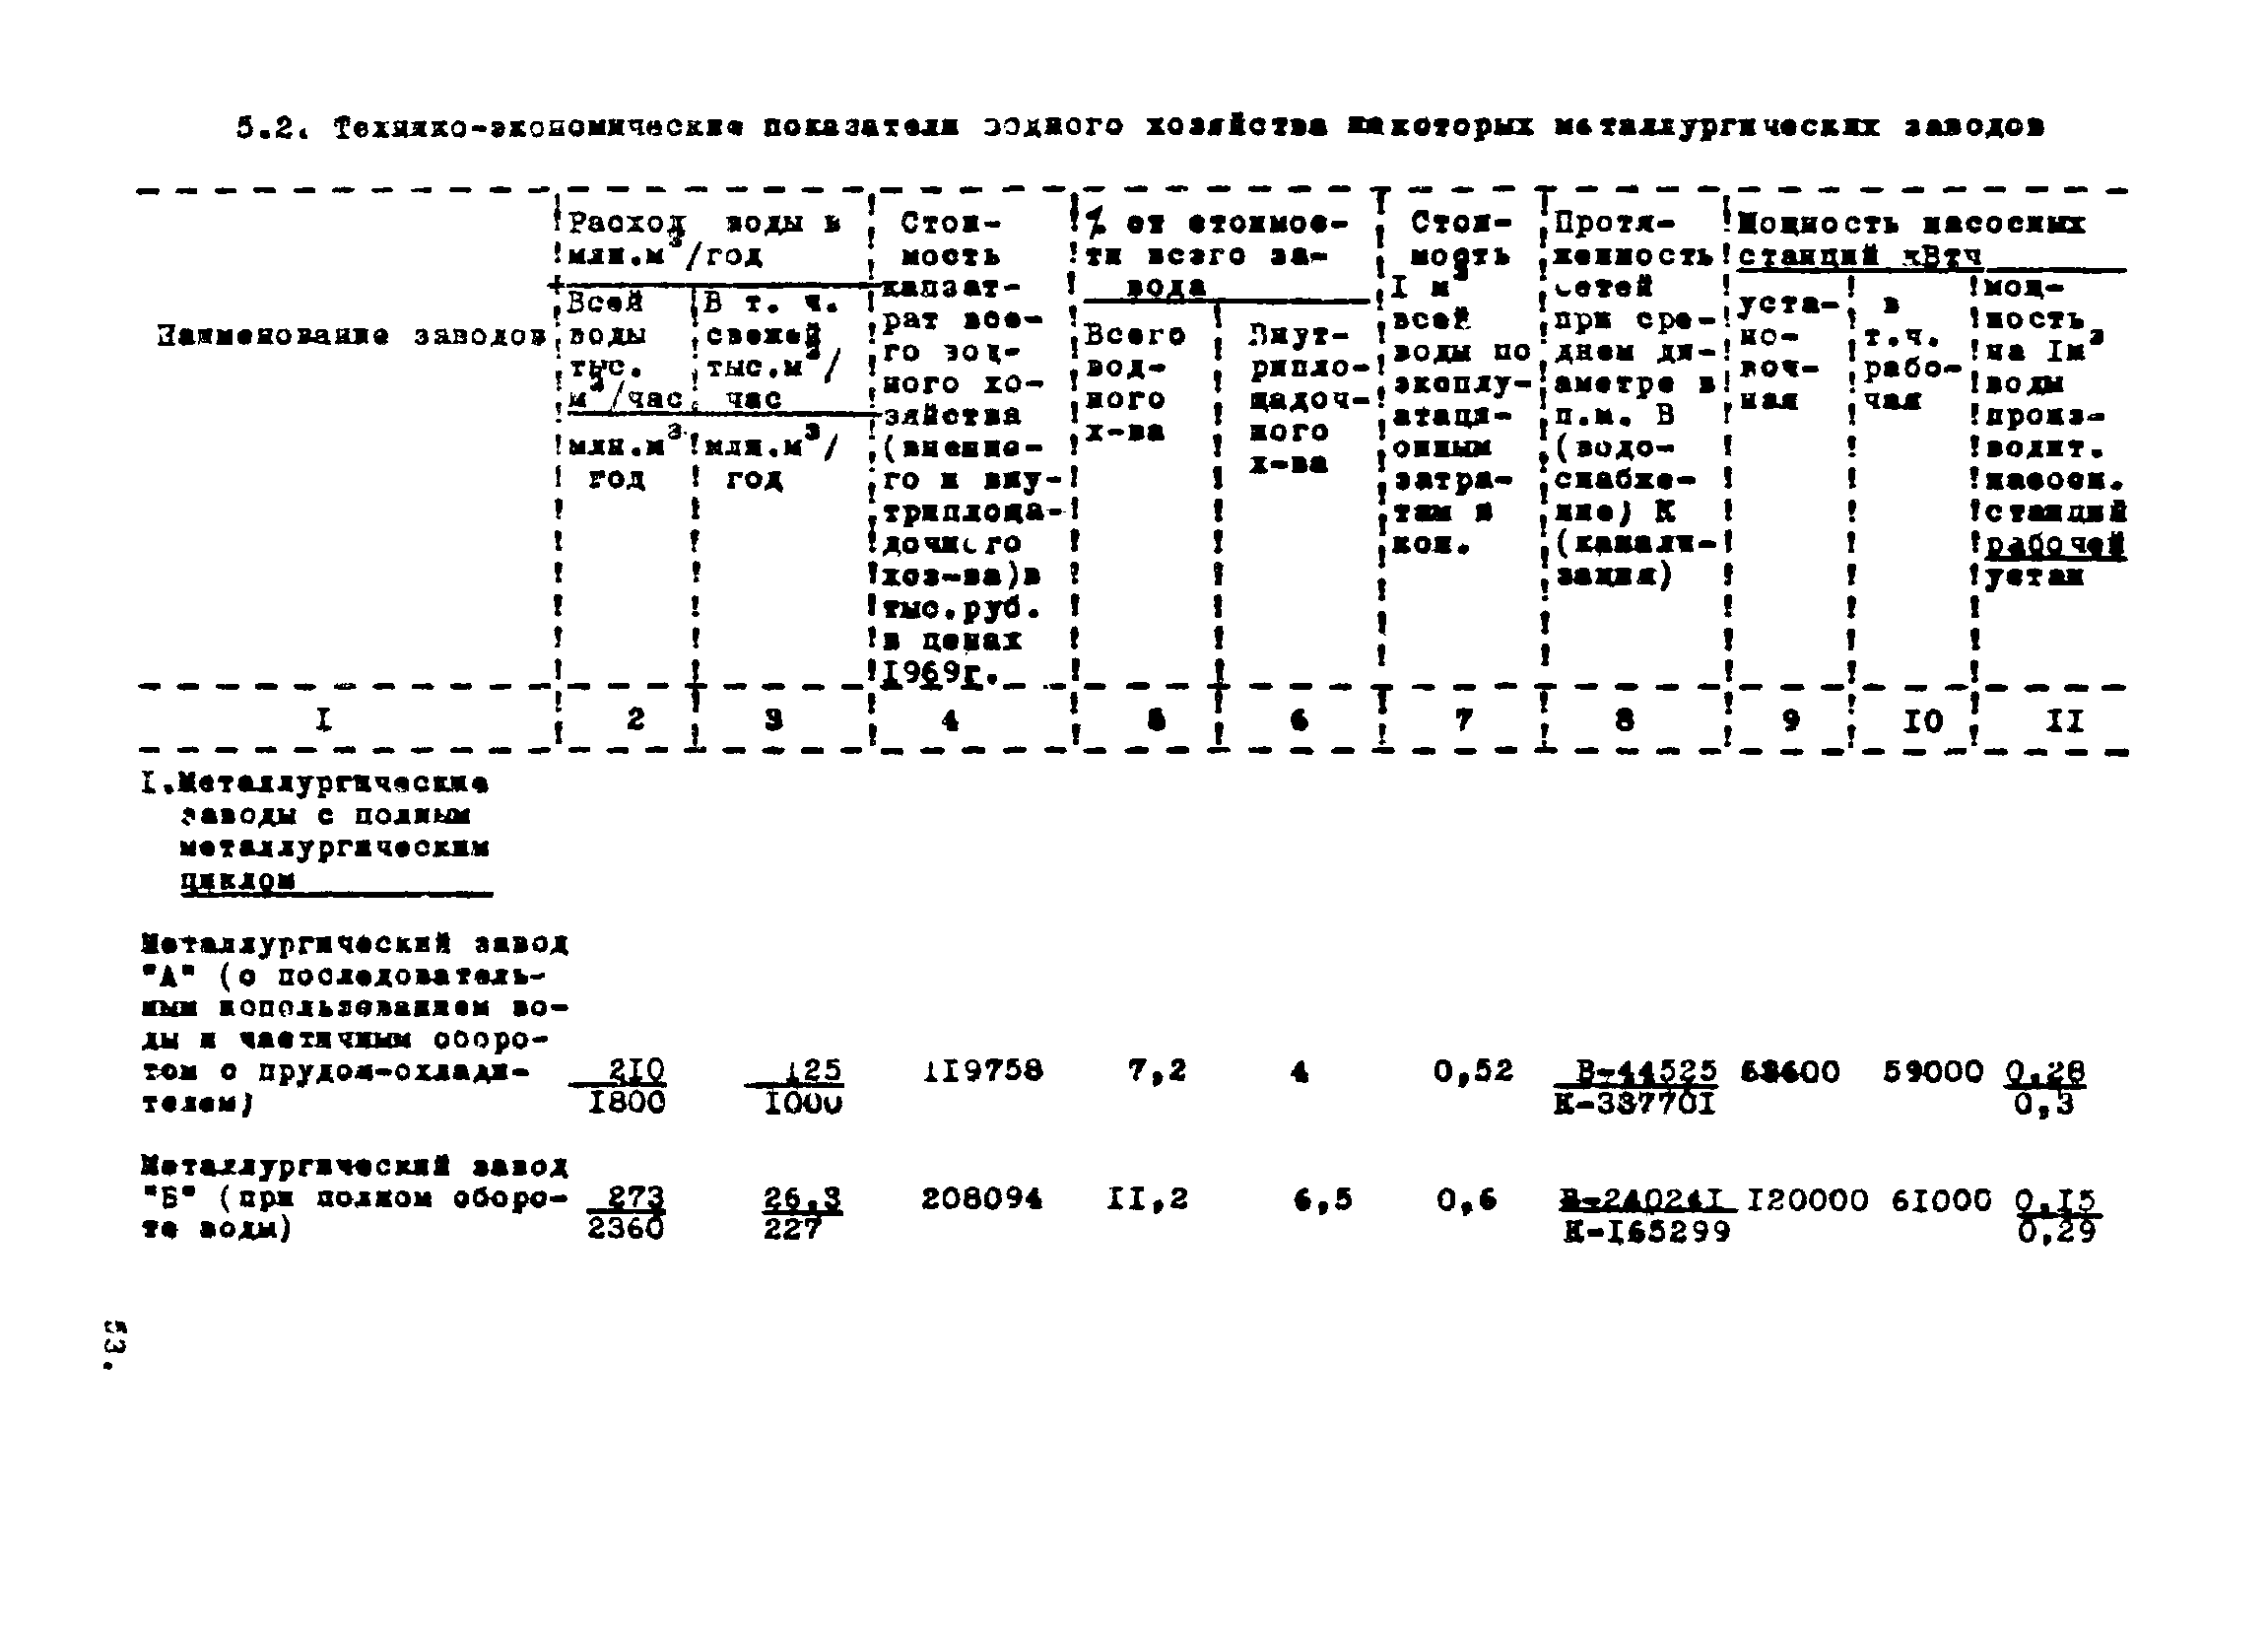 ВНТП 1-35-80/МЧМ СССР